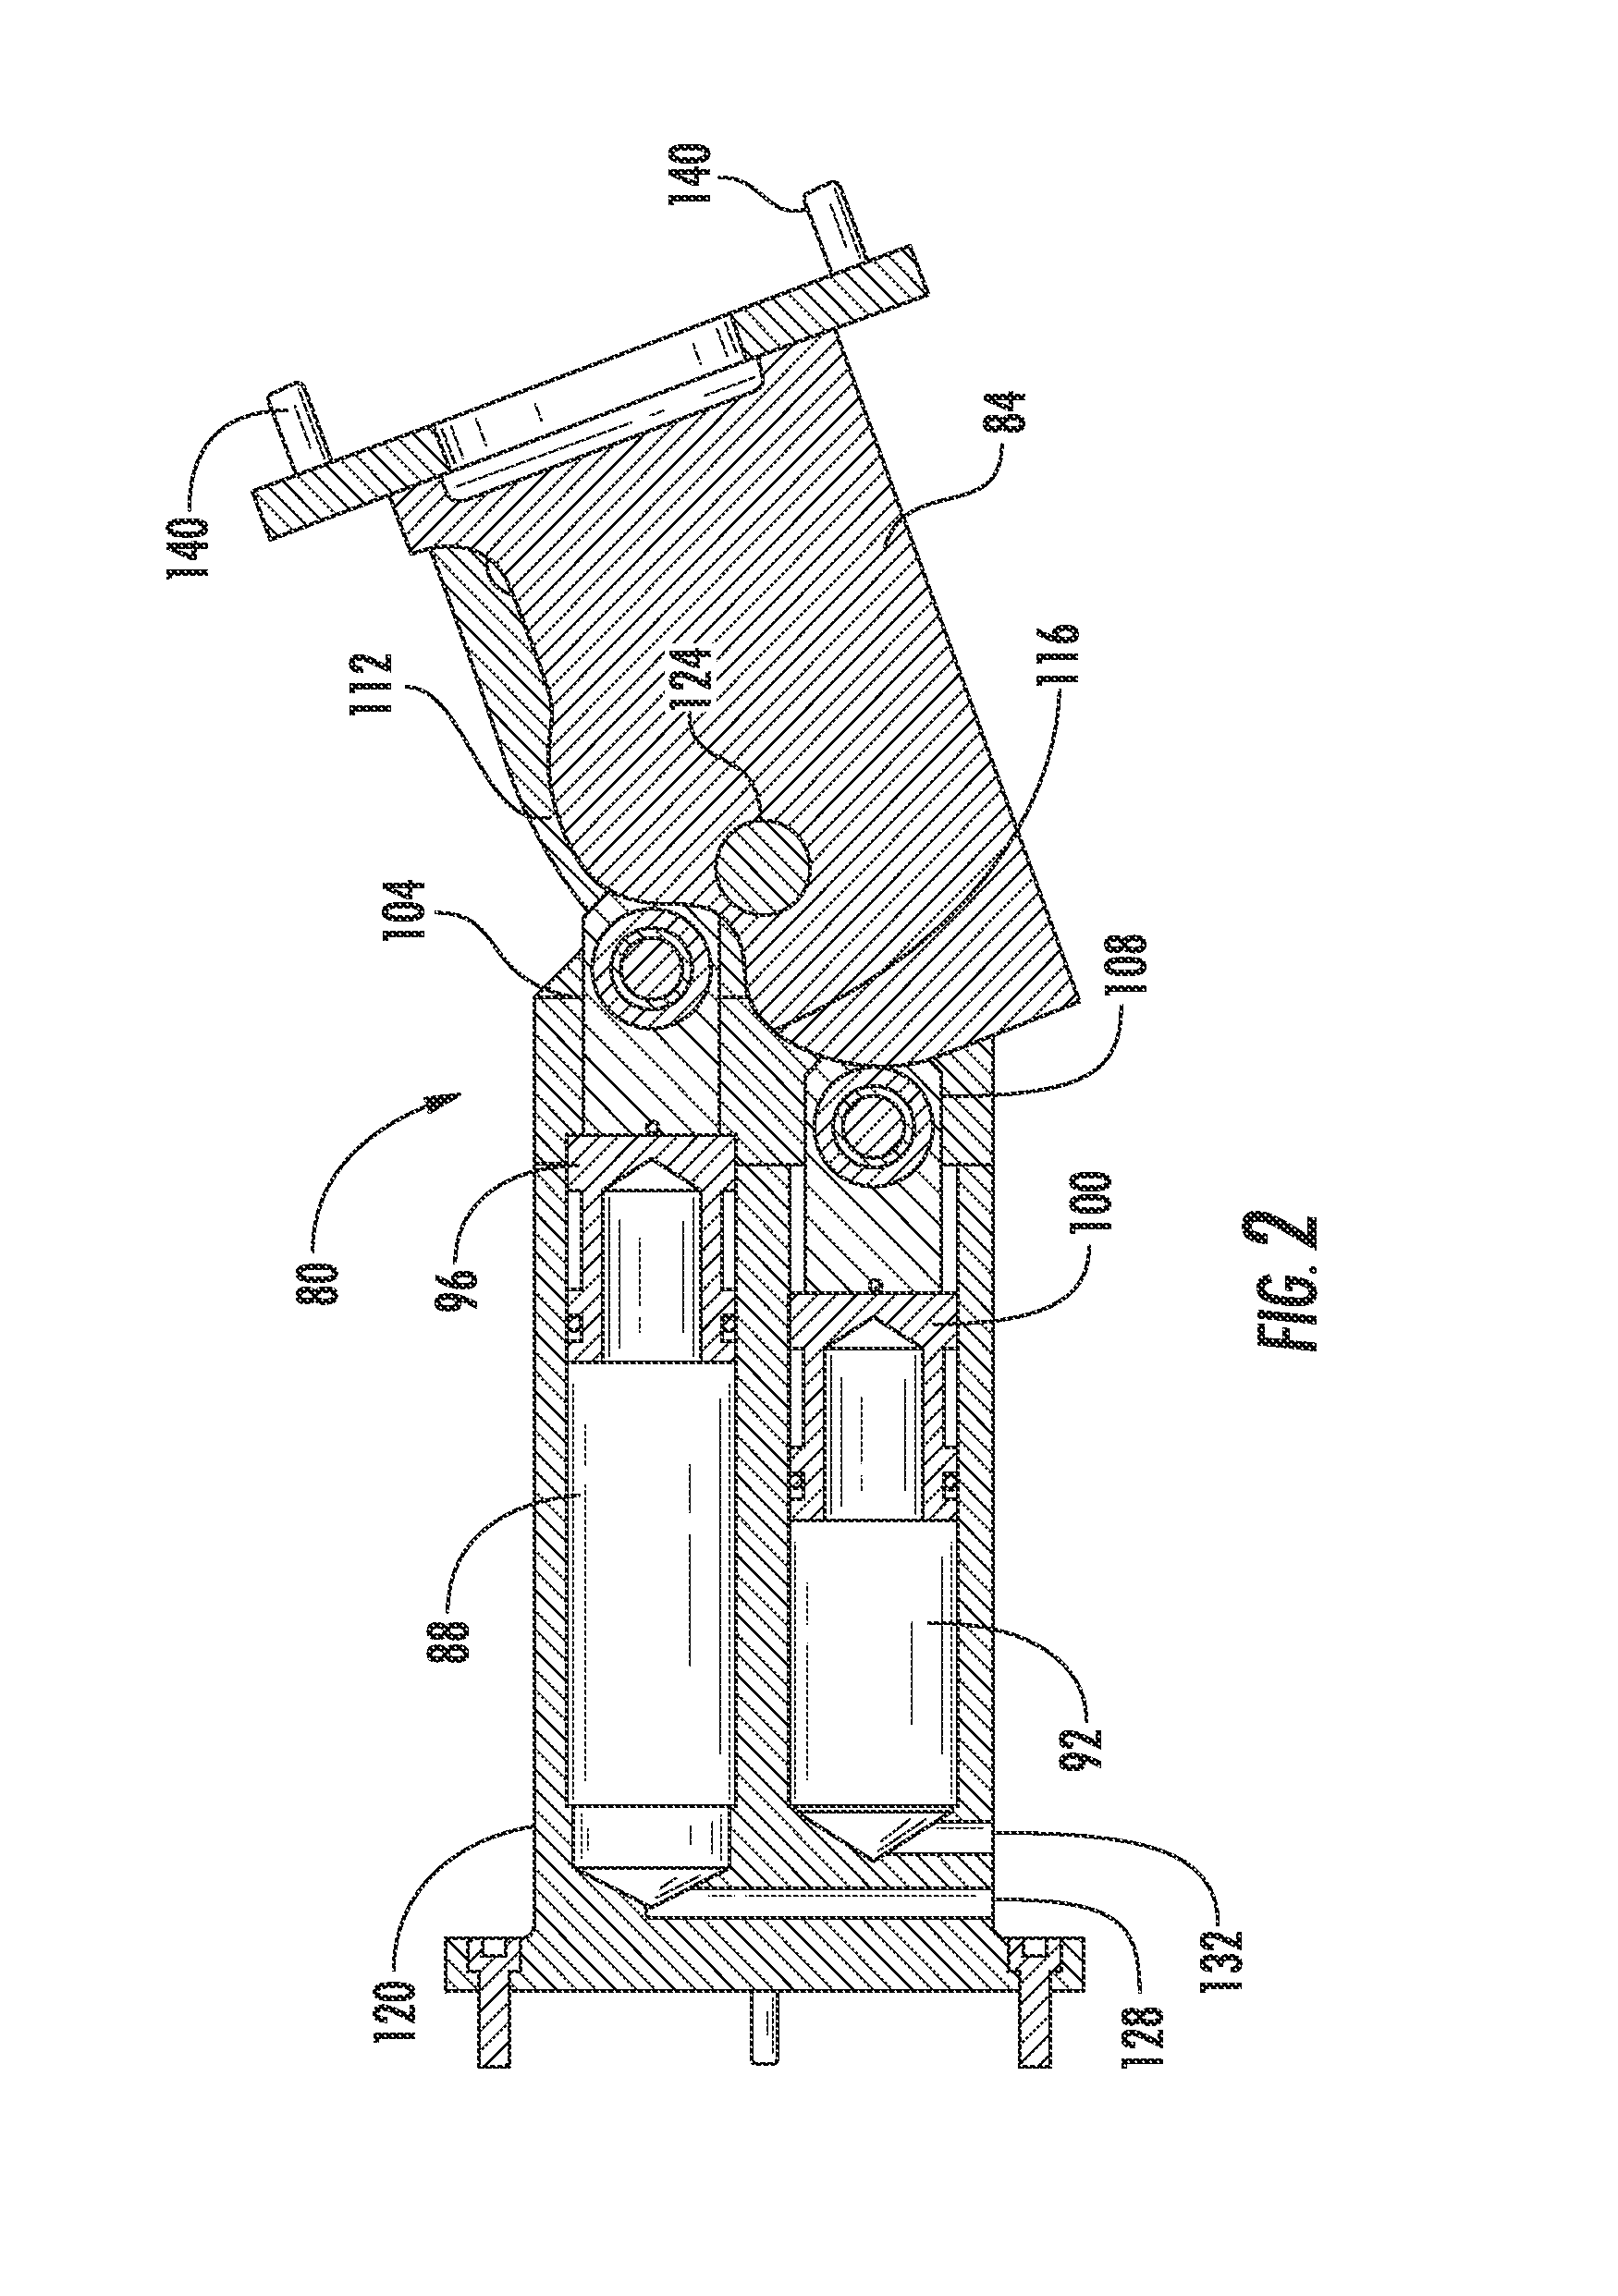 Hydraulic apparatus with direct torque control